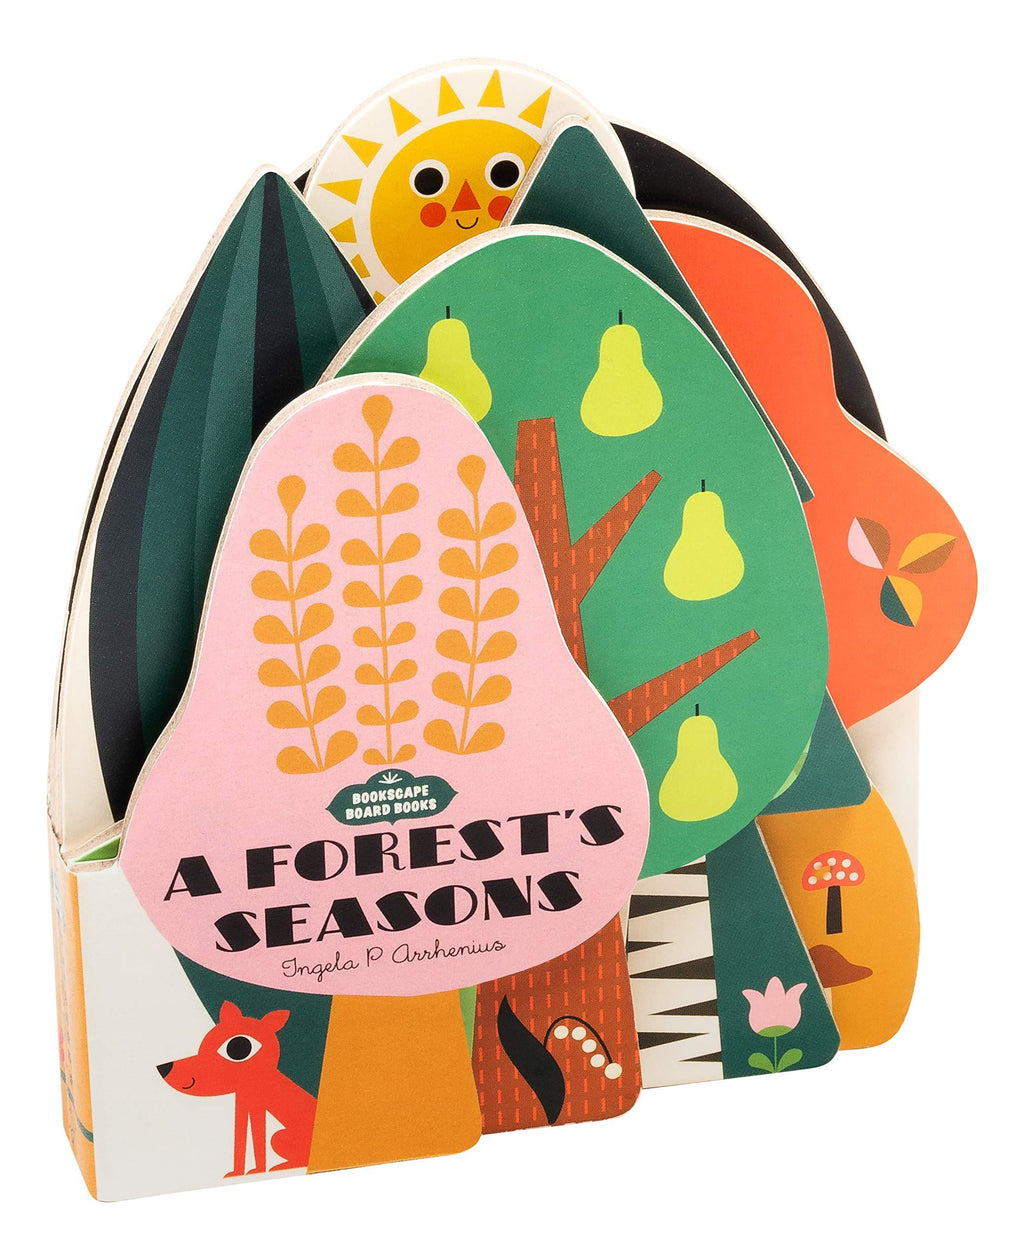 Forest's Seasons (Bookscape) - NSPCC Shop